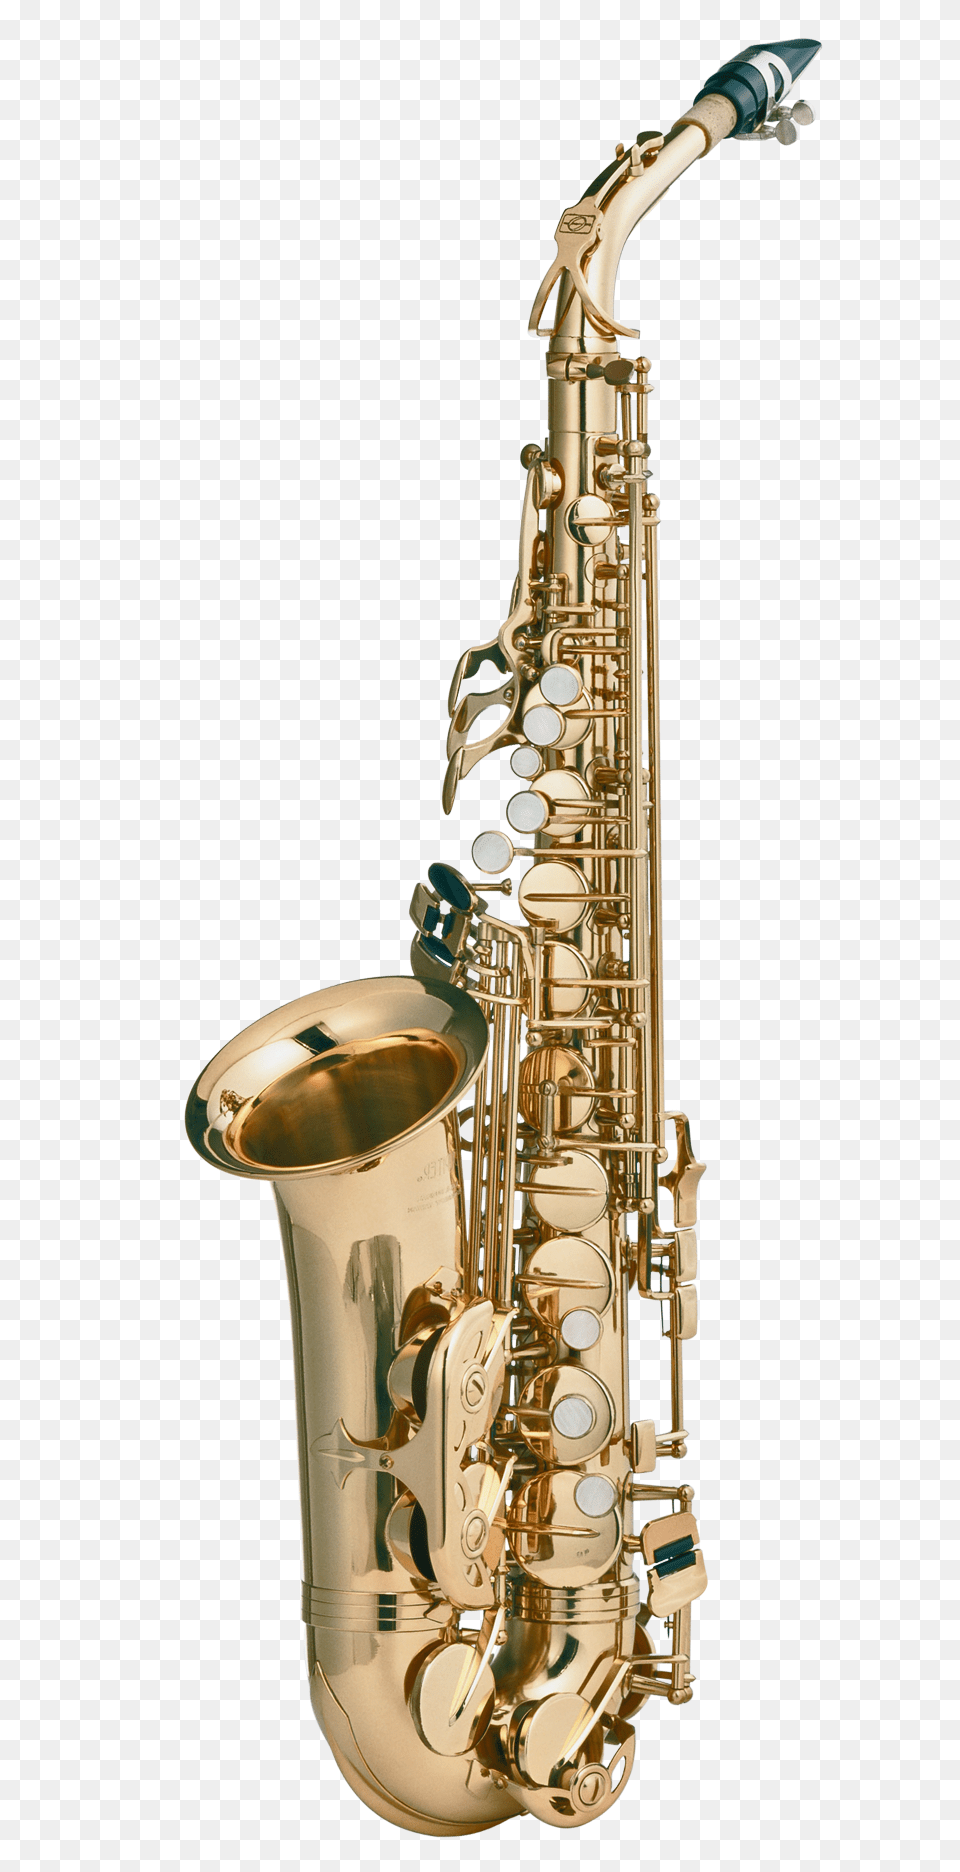 Pngpix Com Saxophone Transparent Image, Musical Instrument Free Png Download